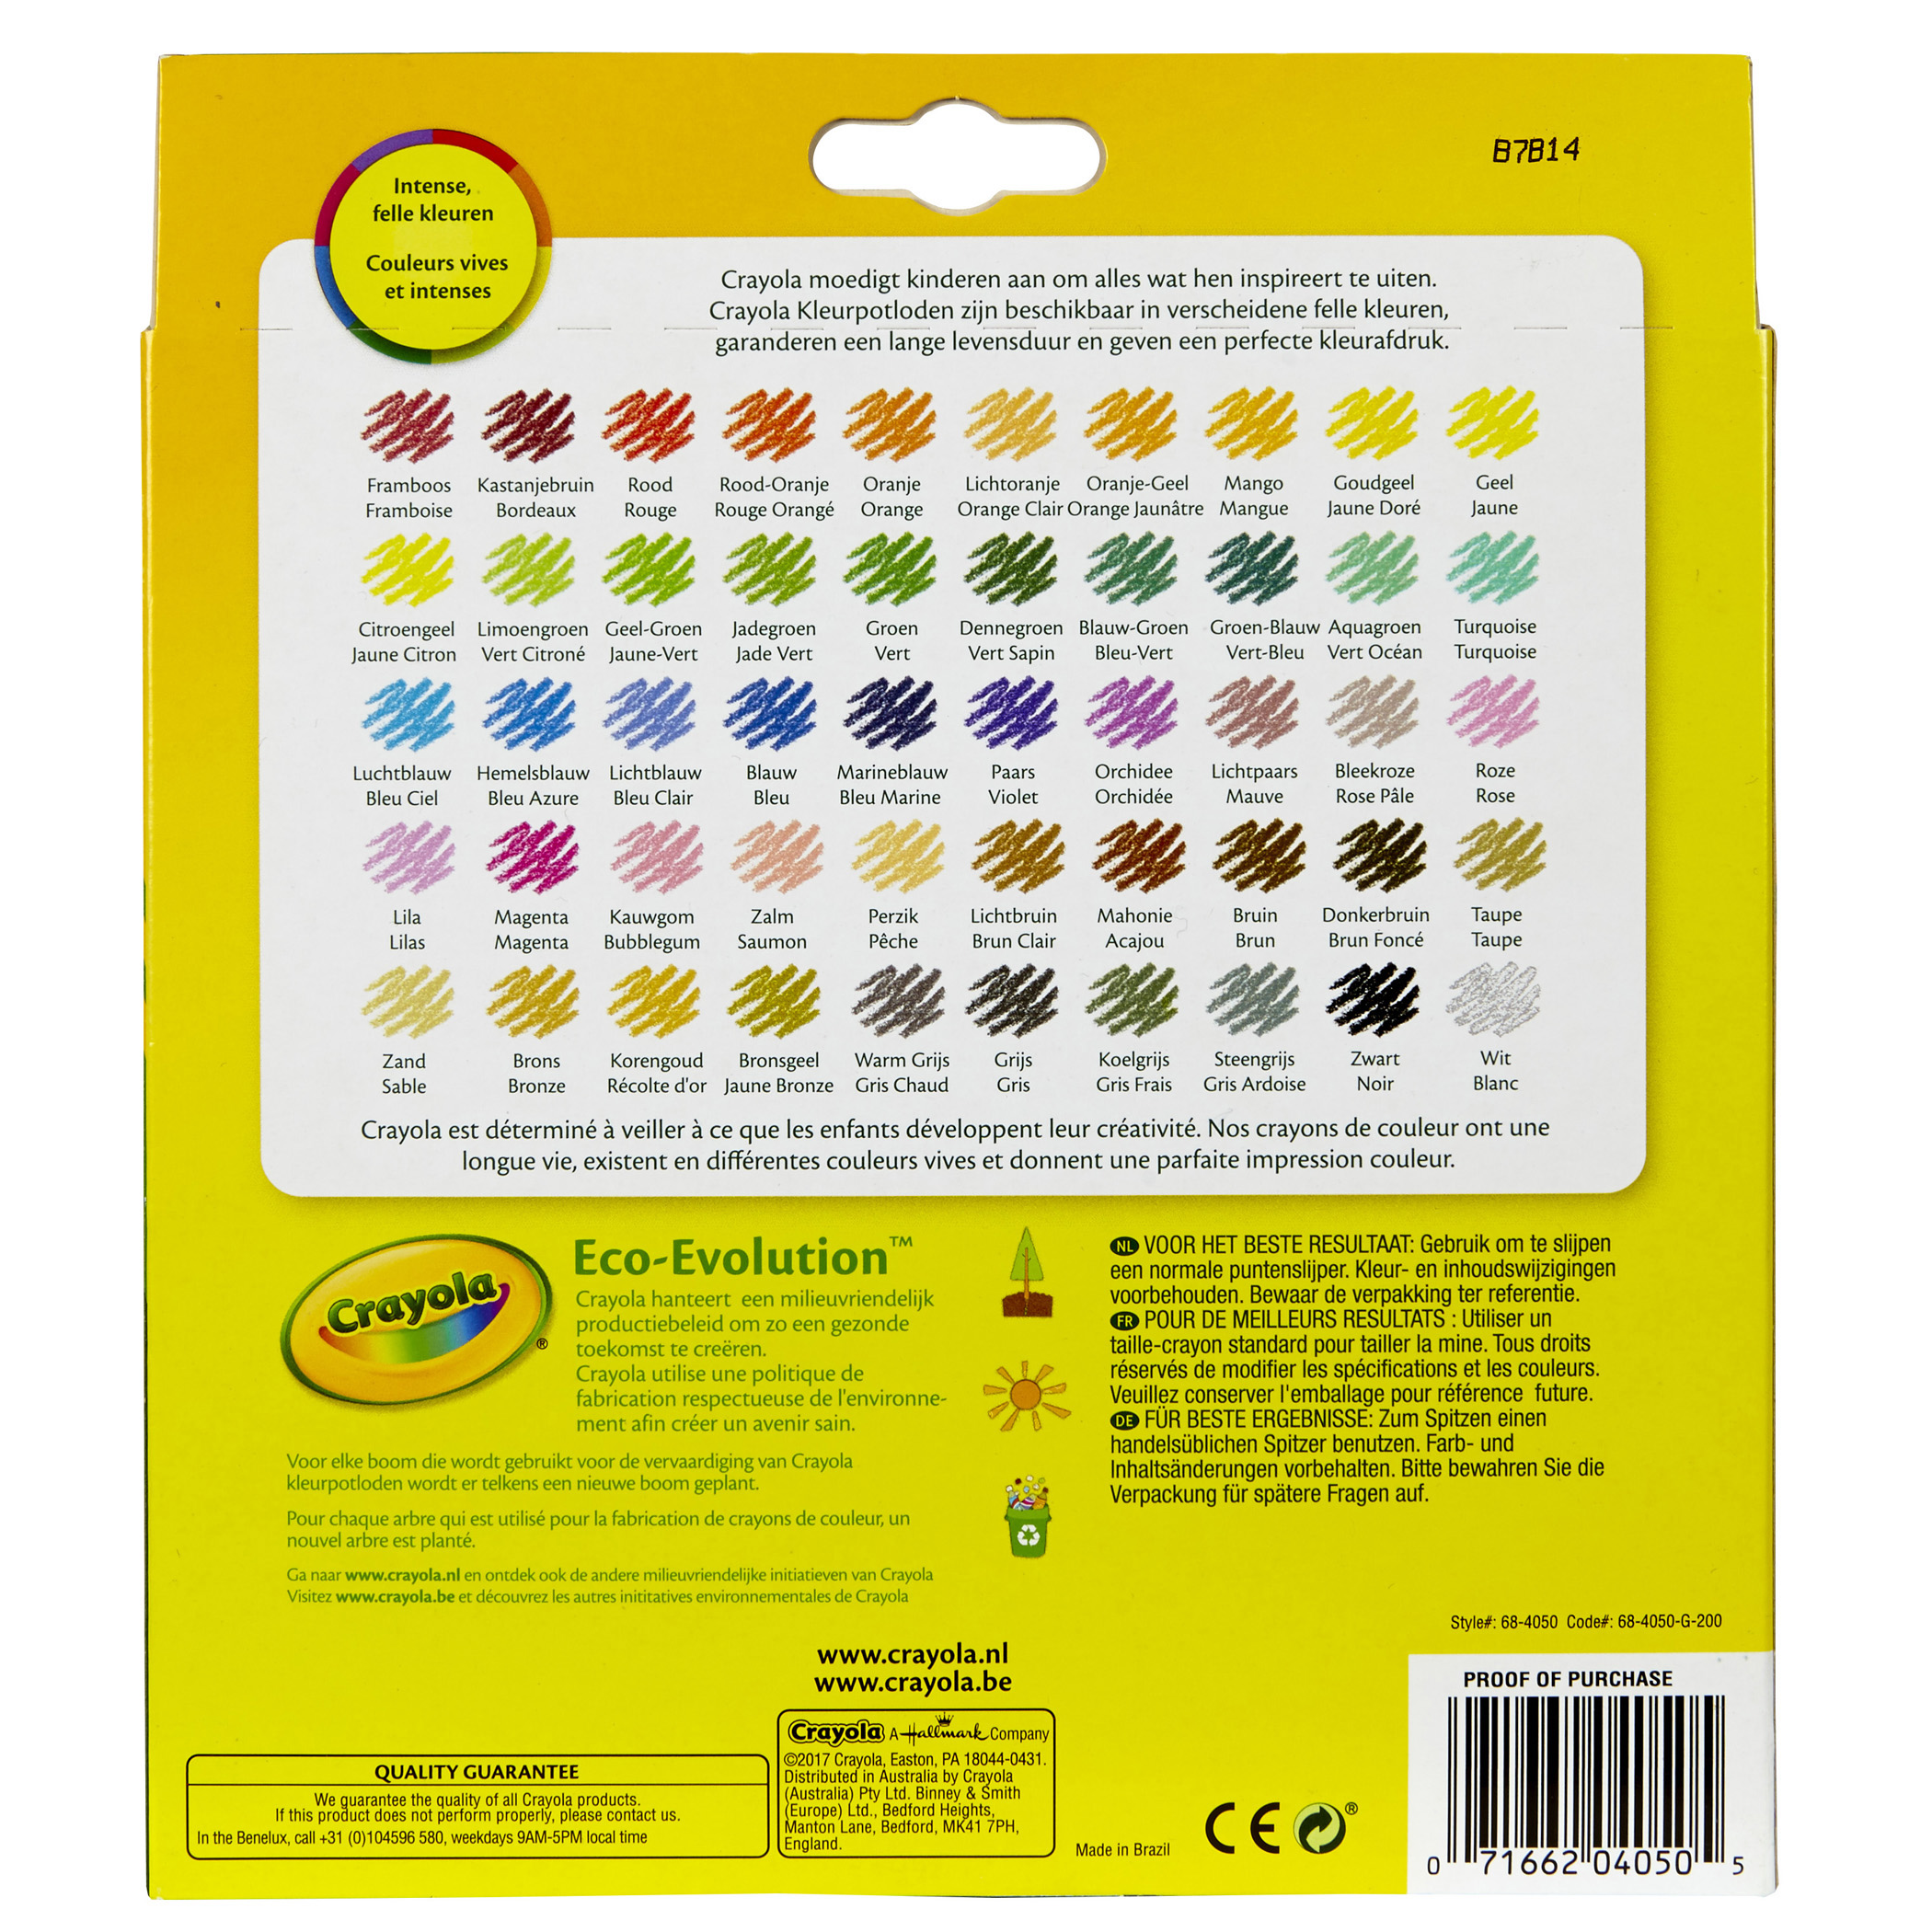 The Teachers' Lounge®  Twistables® Colored Pencils, 12 Per Box, 6